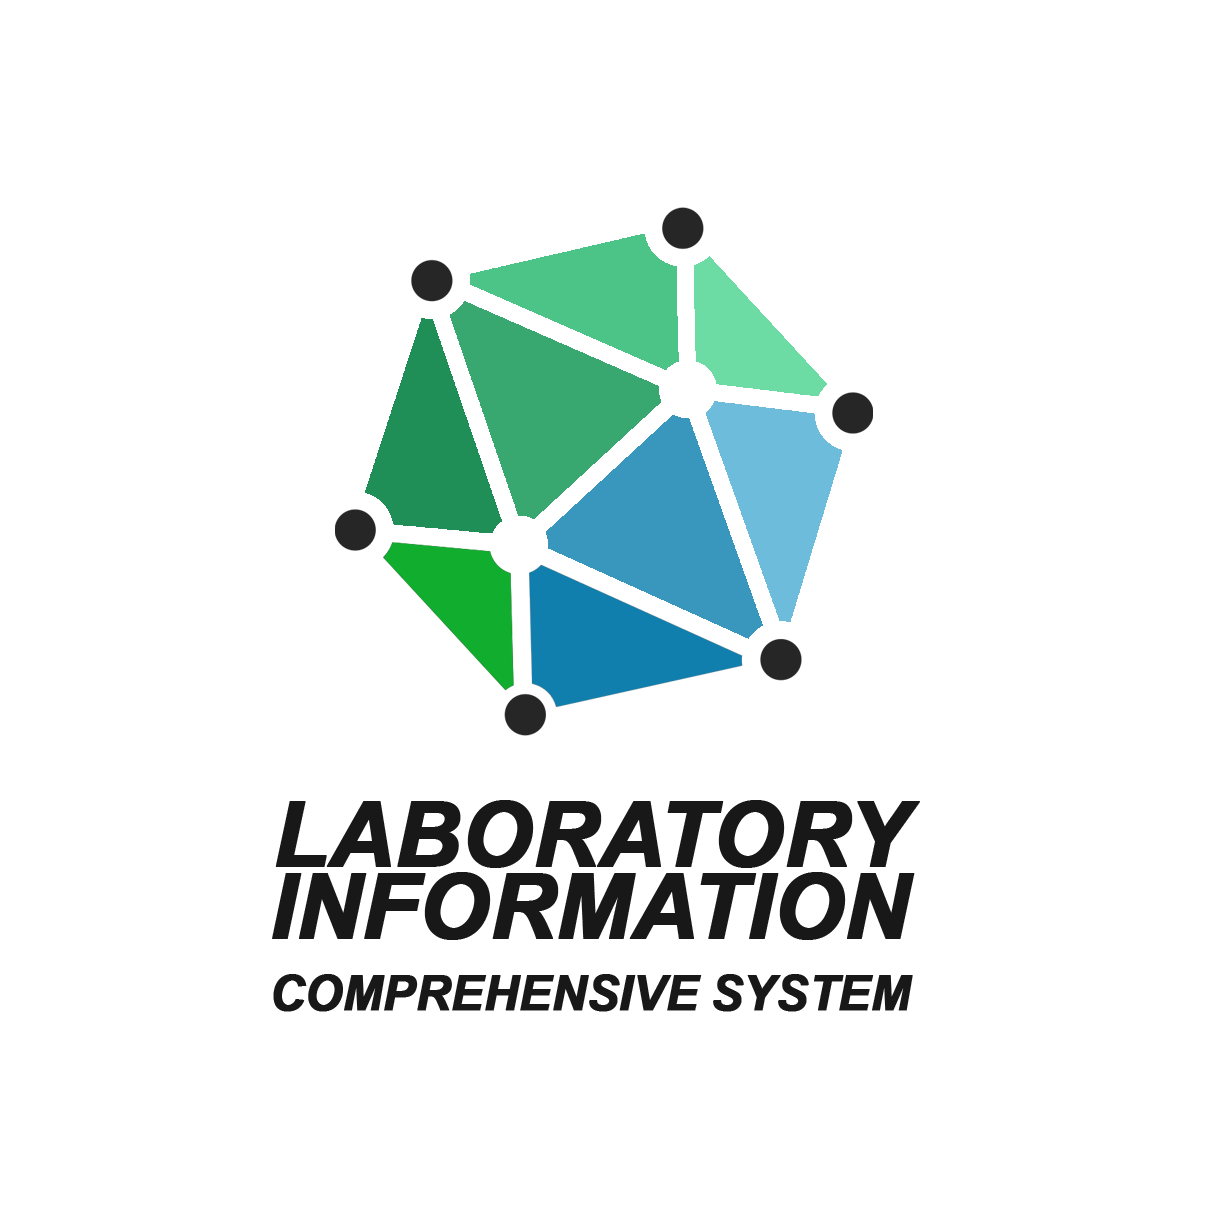 Laboratory information comprehensive system